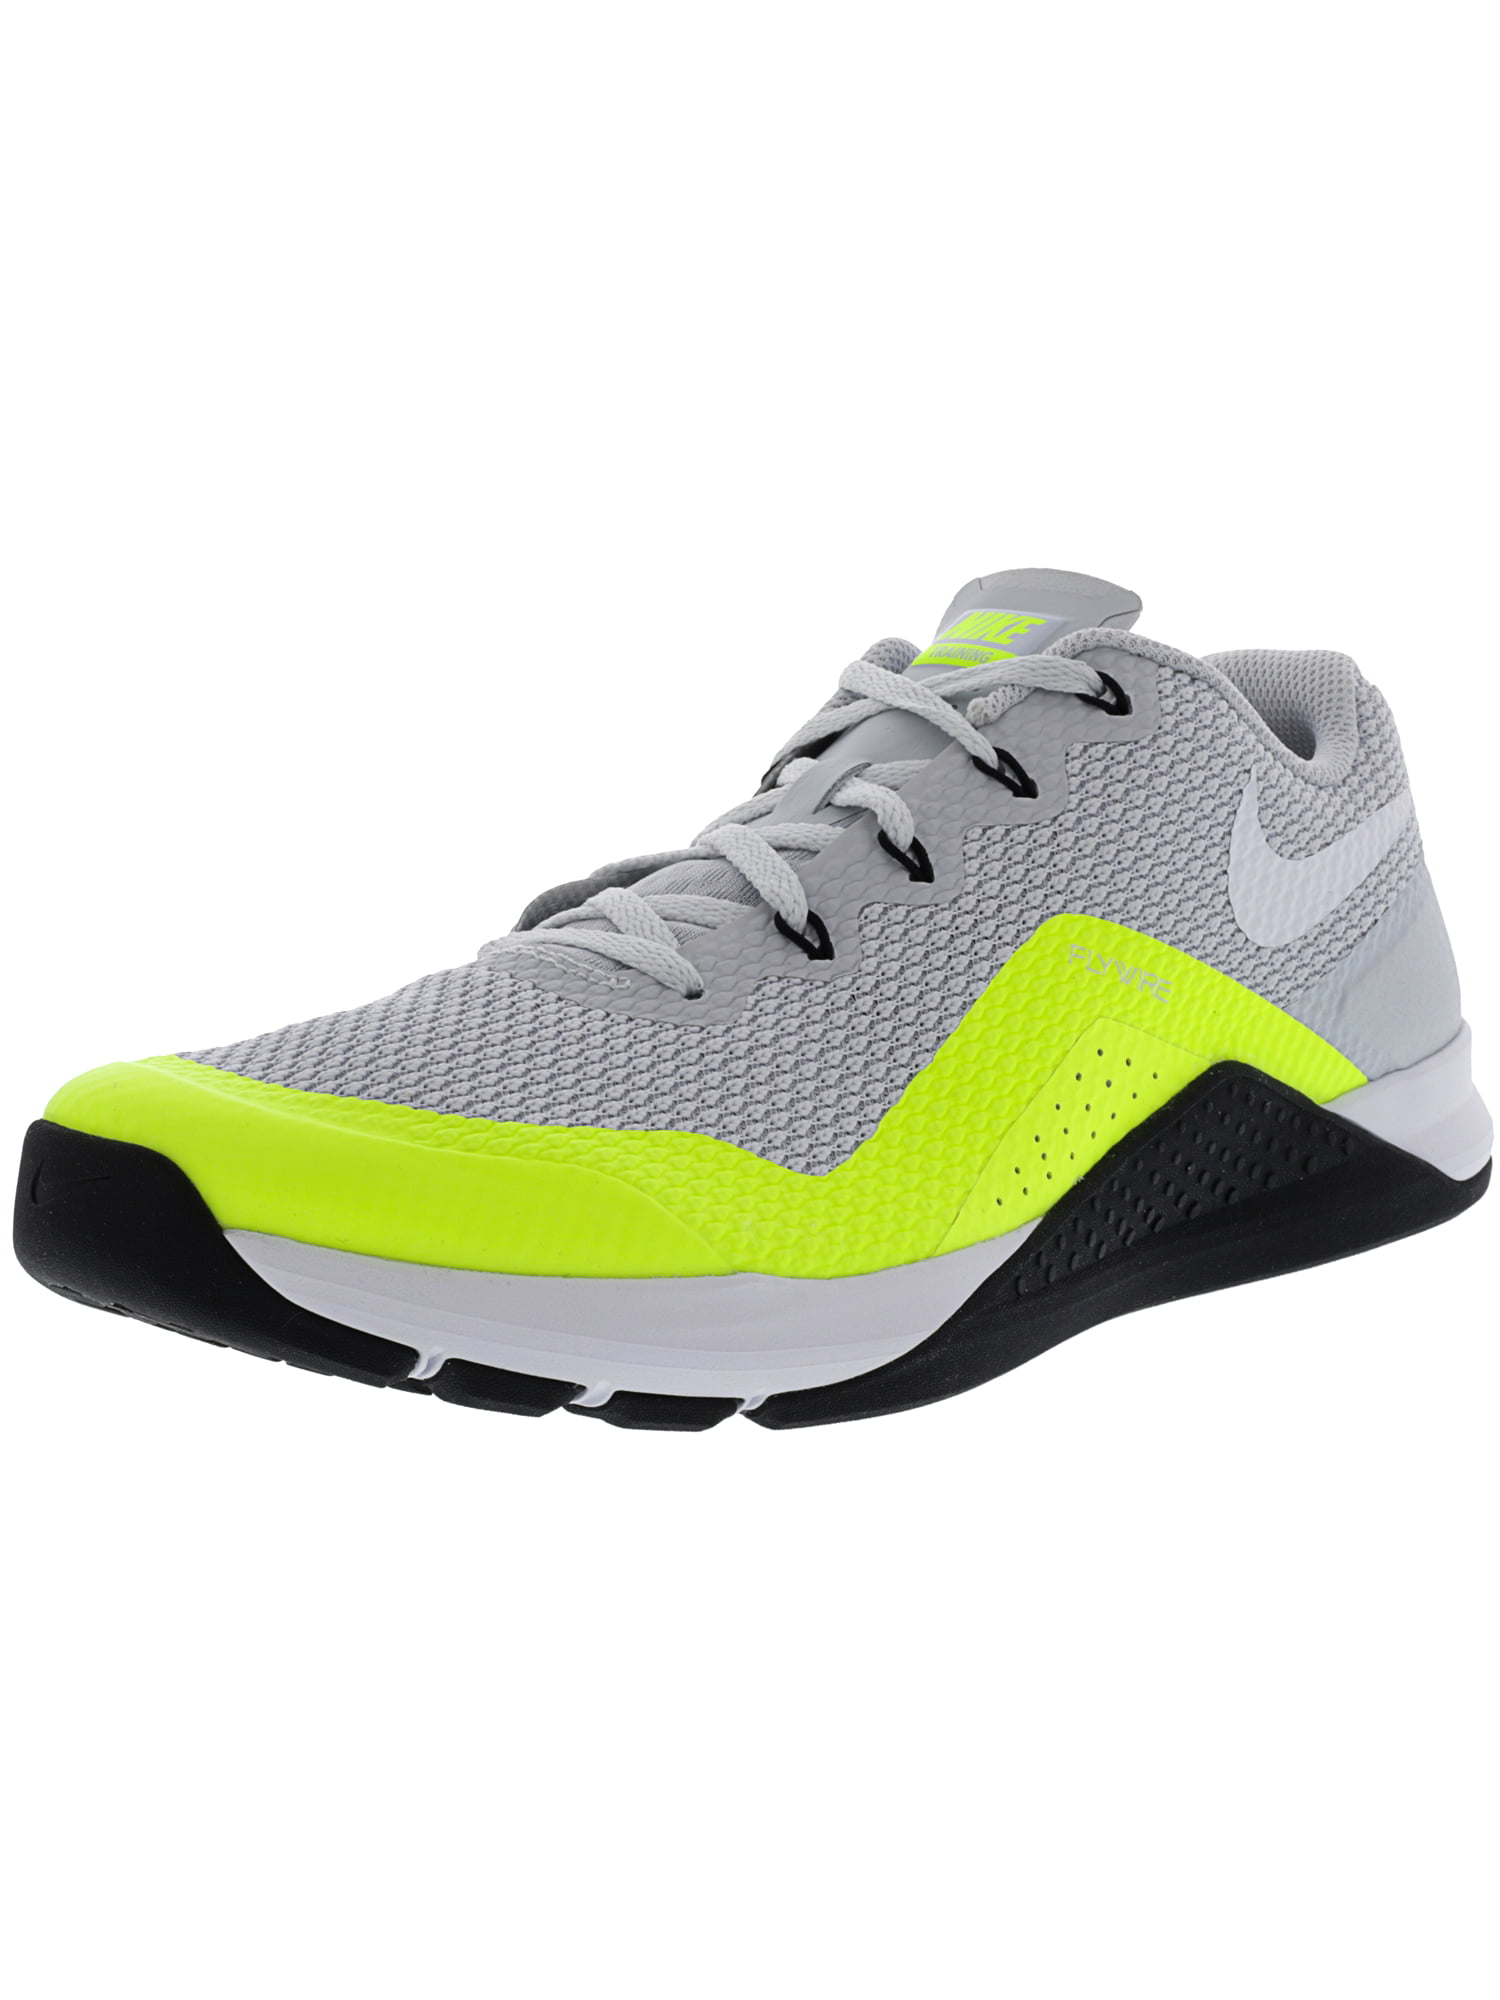 Nike Men's Metcon Repper Pure Platinum / White - Volt Black Low Top Cross Trainer Shoe 8.5M - Walmart.com